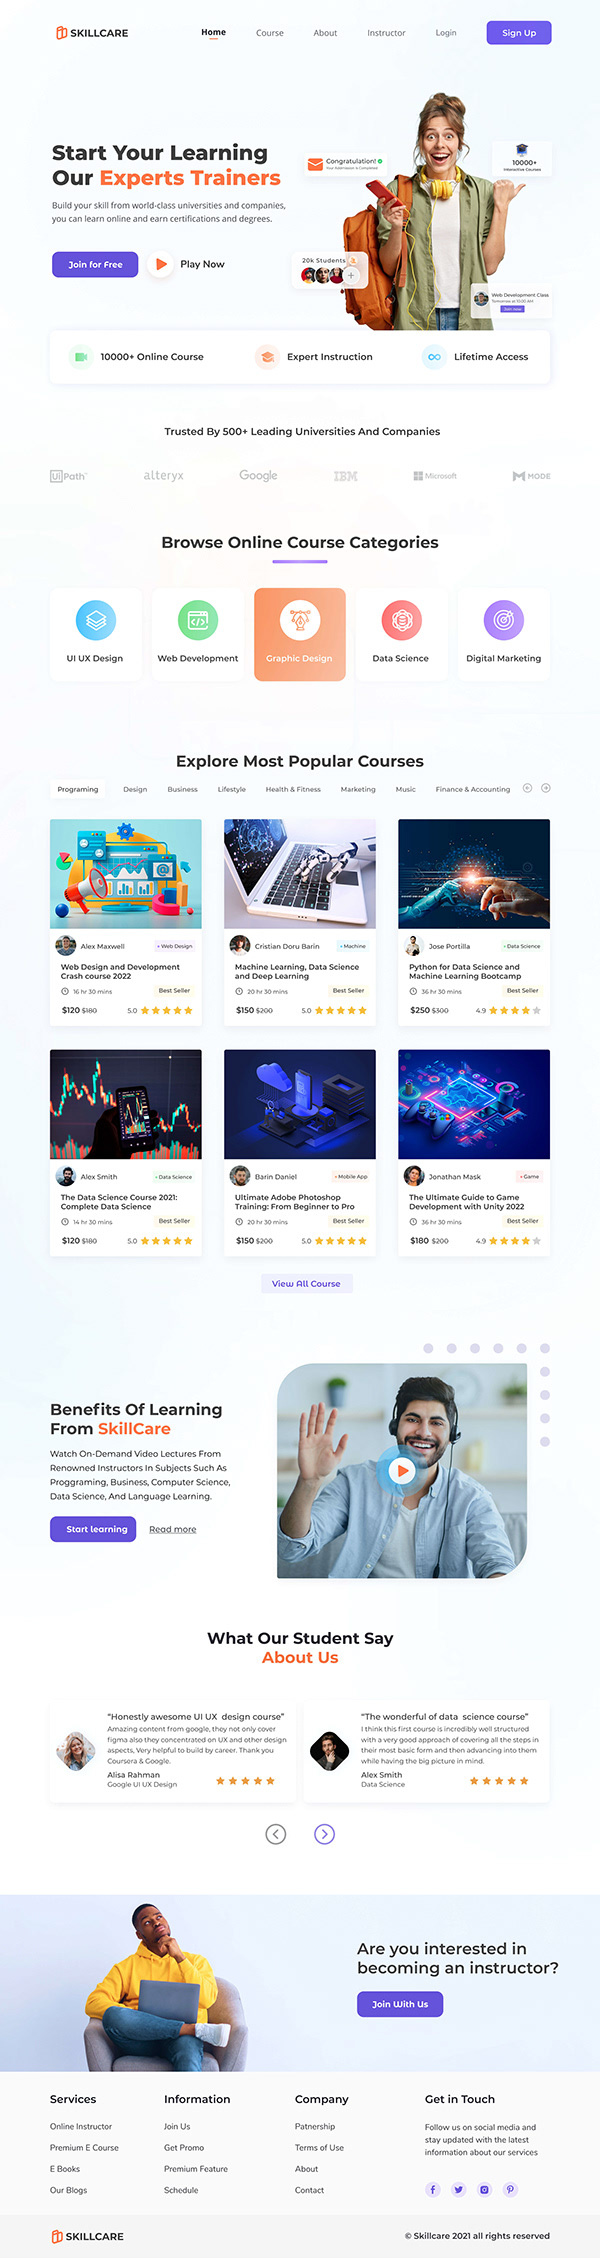 Online Learning- Educational Web Design